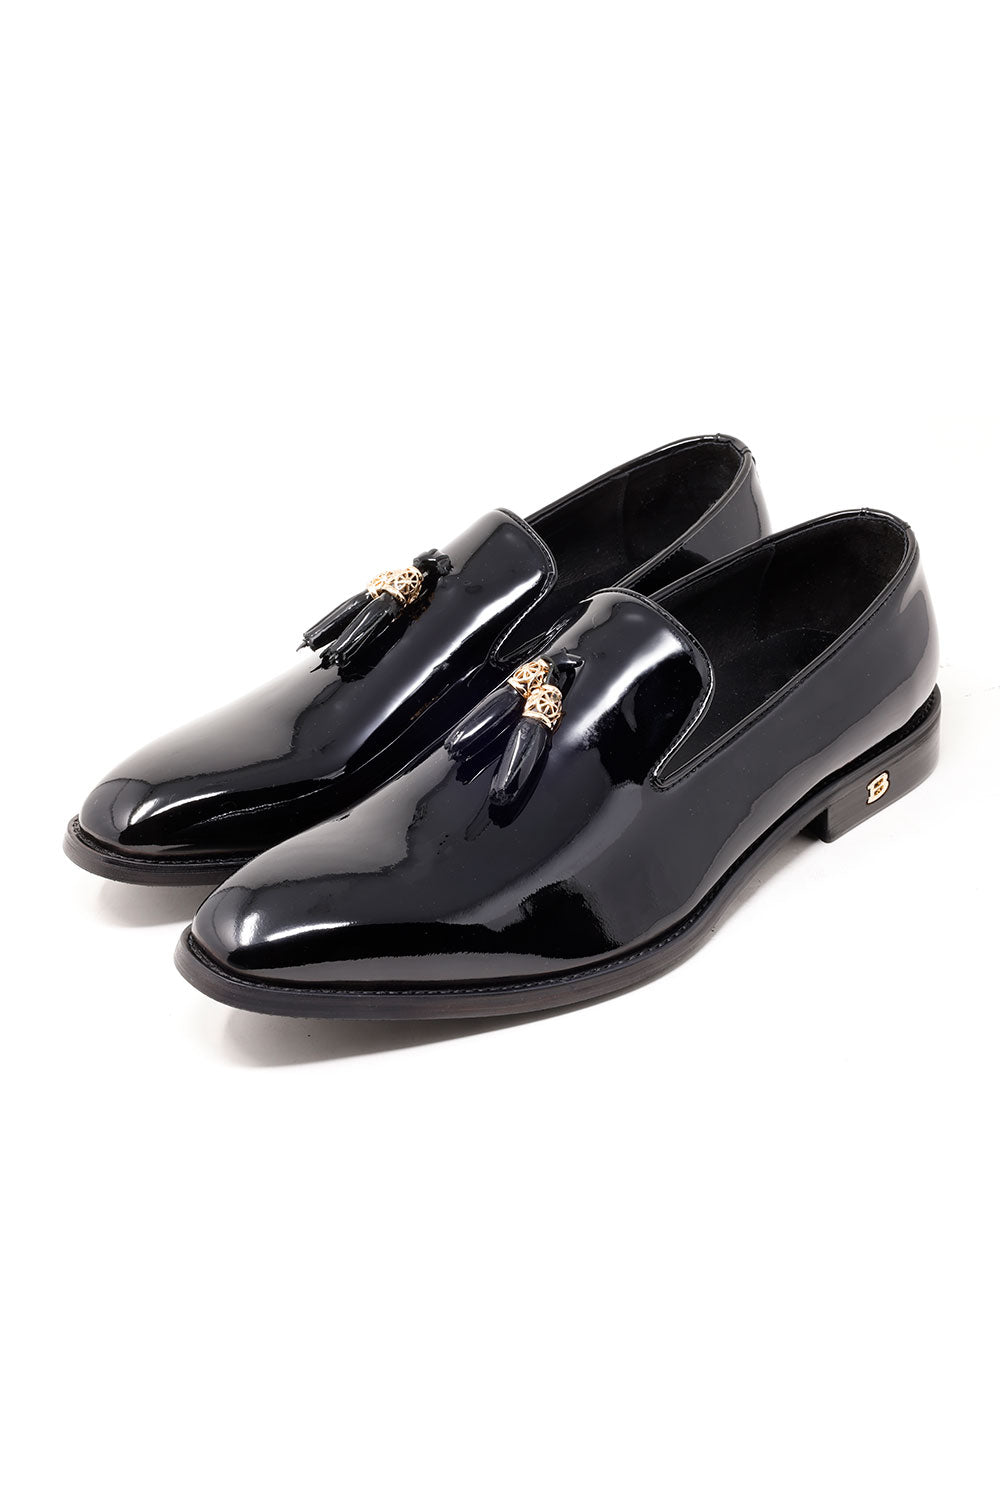 Barabas Men's Shiny Design Tassel Slip On Leather Loafer Shoes 3SH39 Black